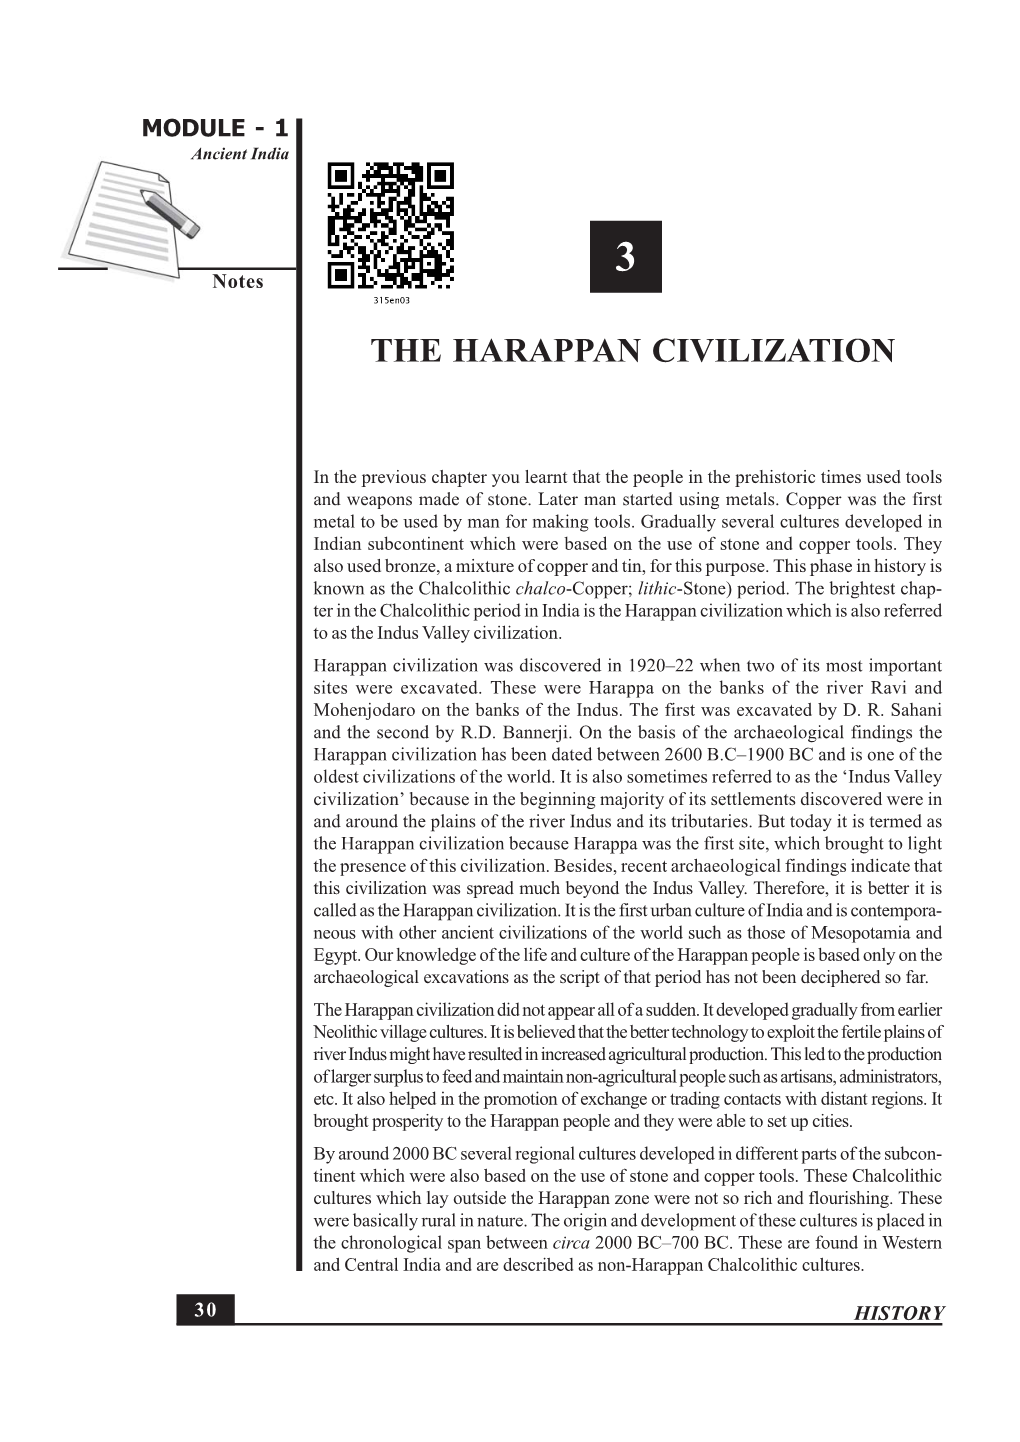 3. the Harappan Civilization